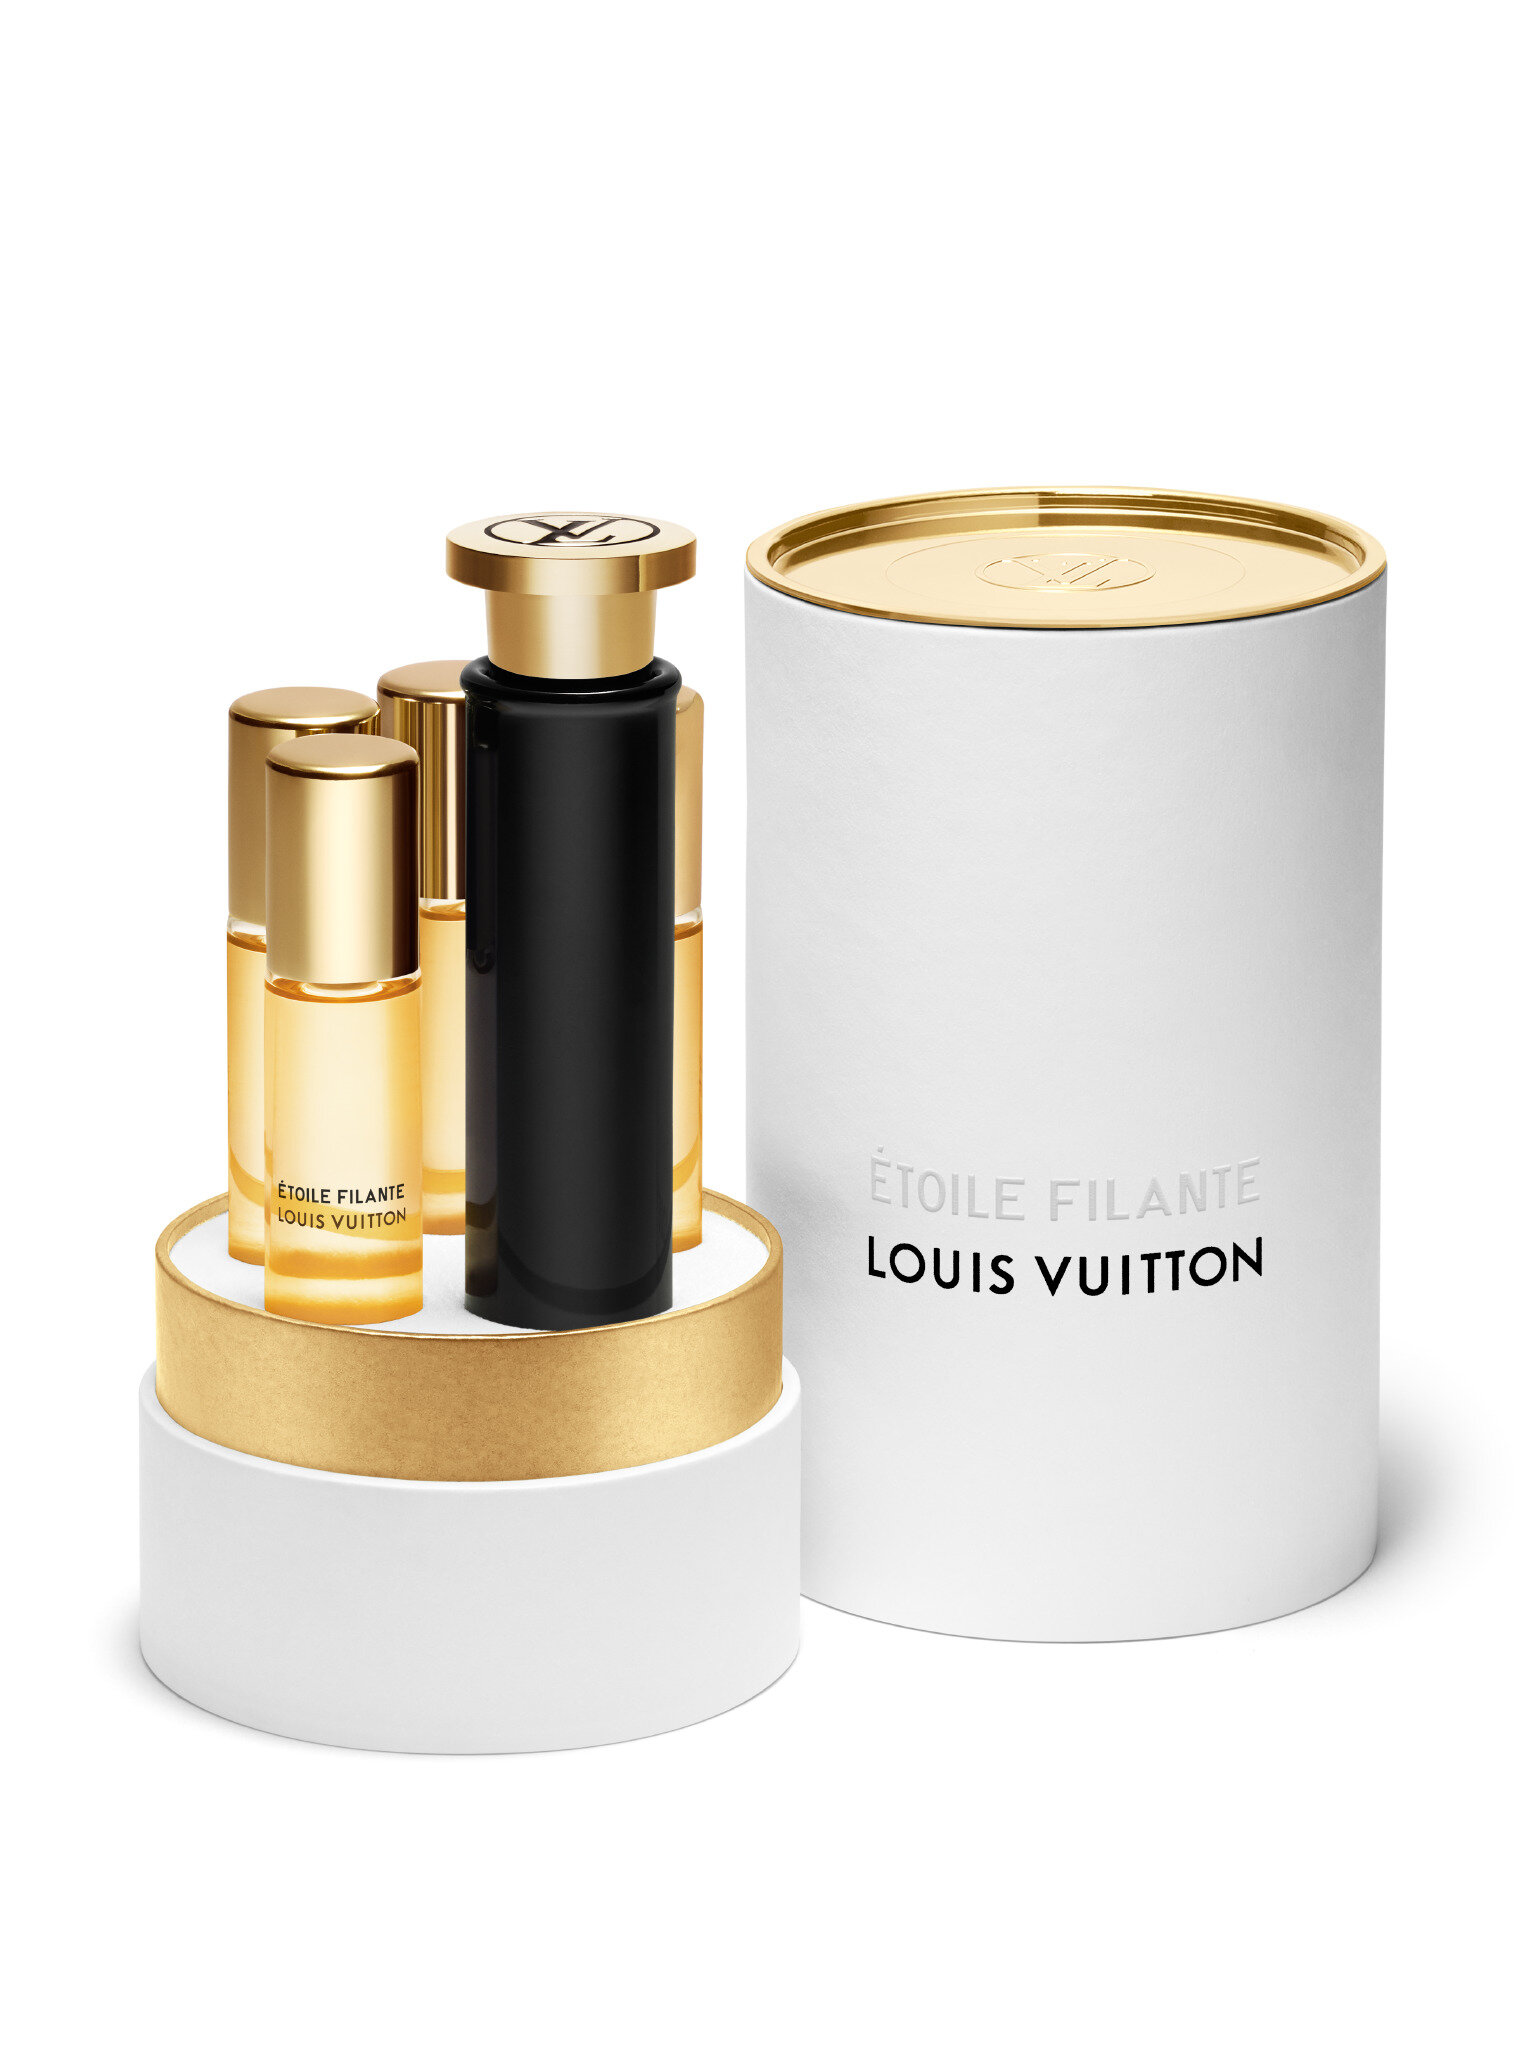 LOUIS VUITTON ETOILE FILANTE – Rich and Luxe